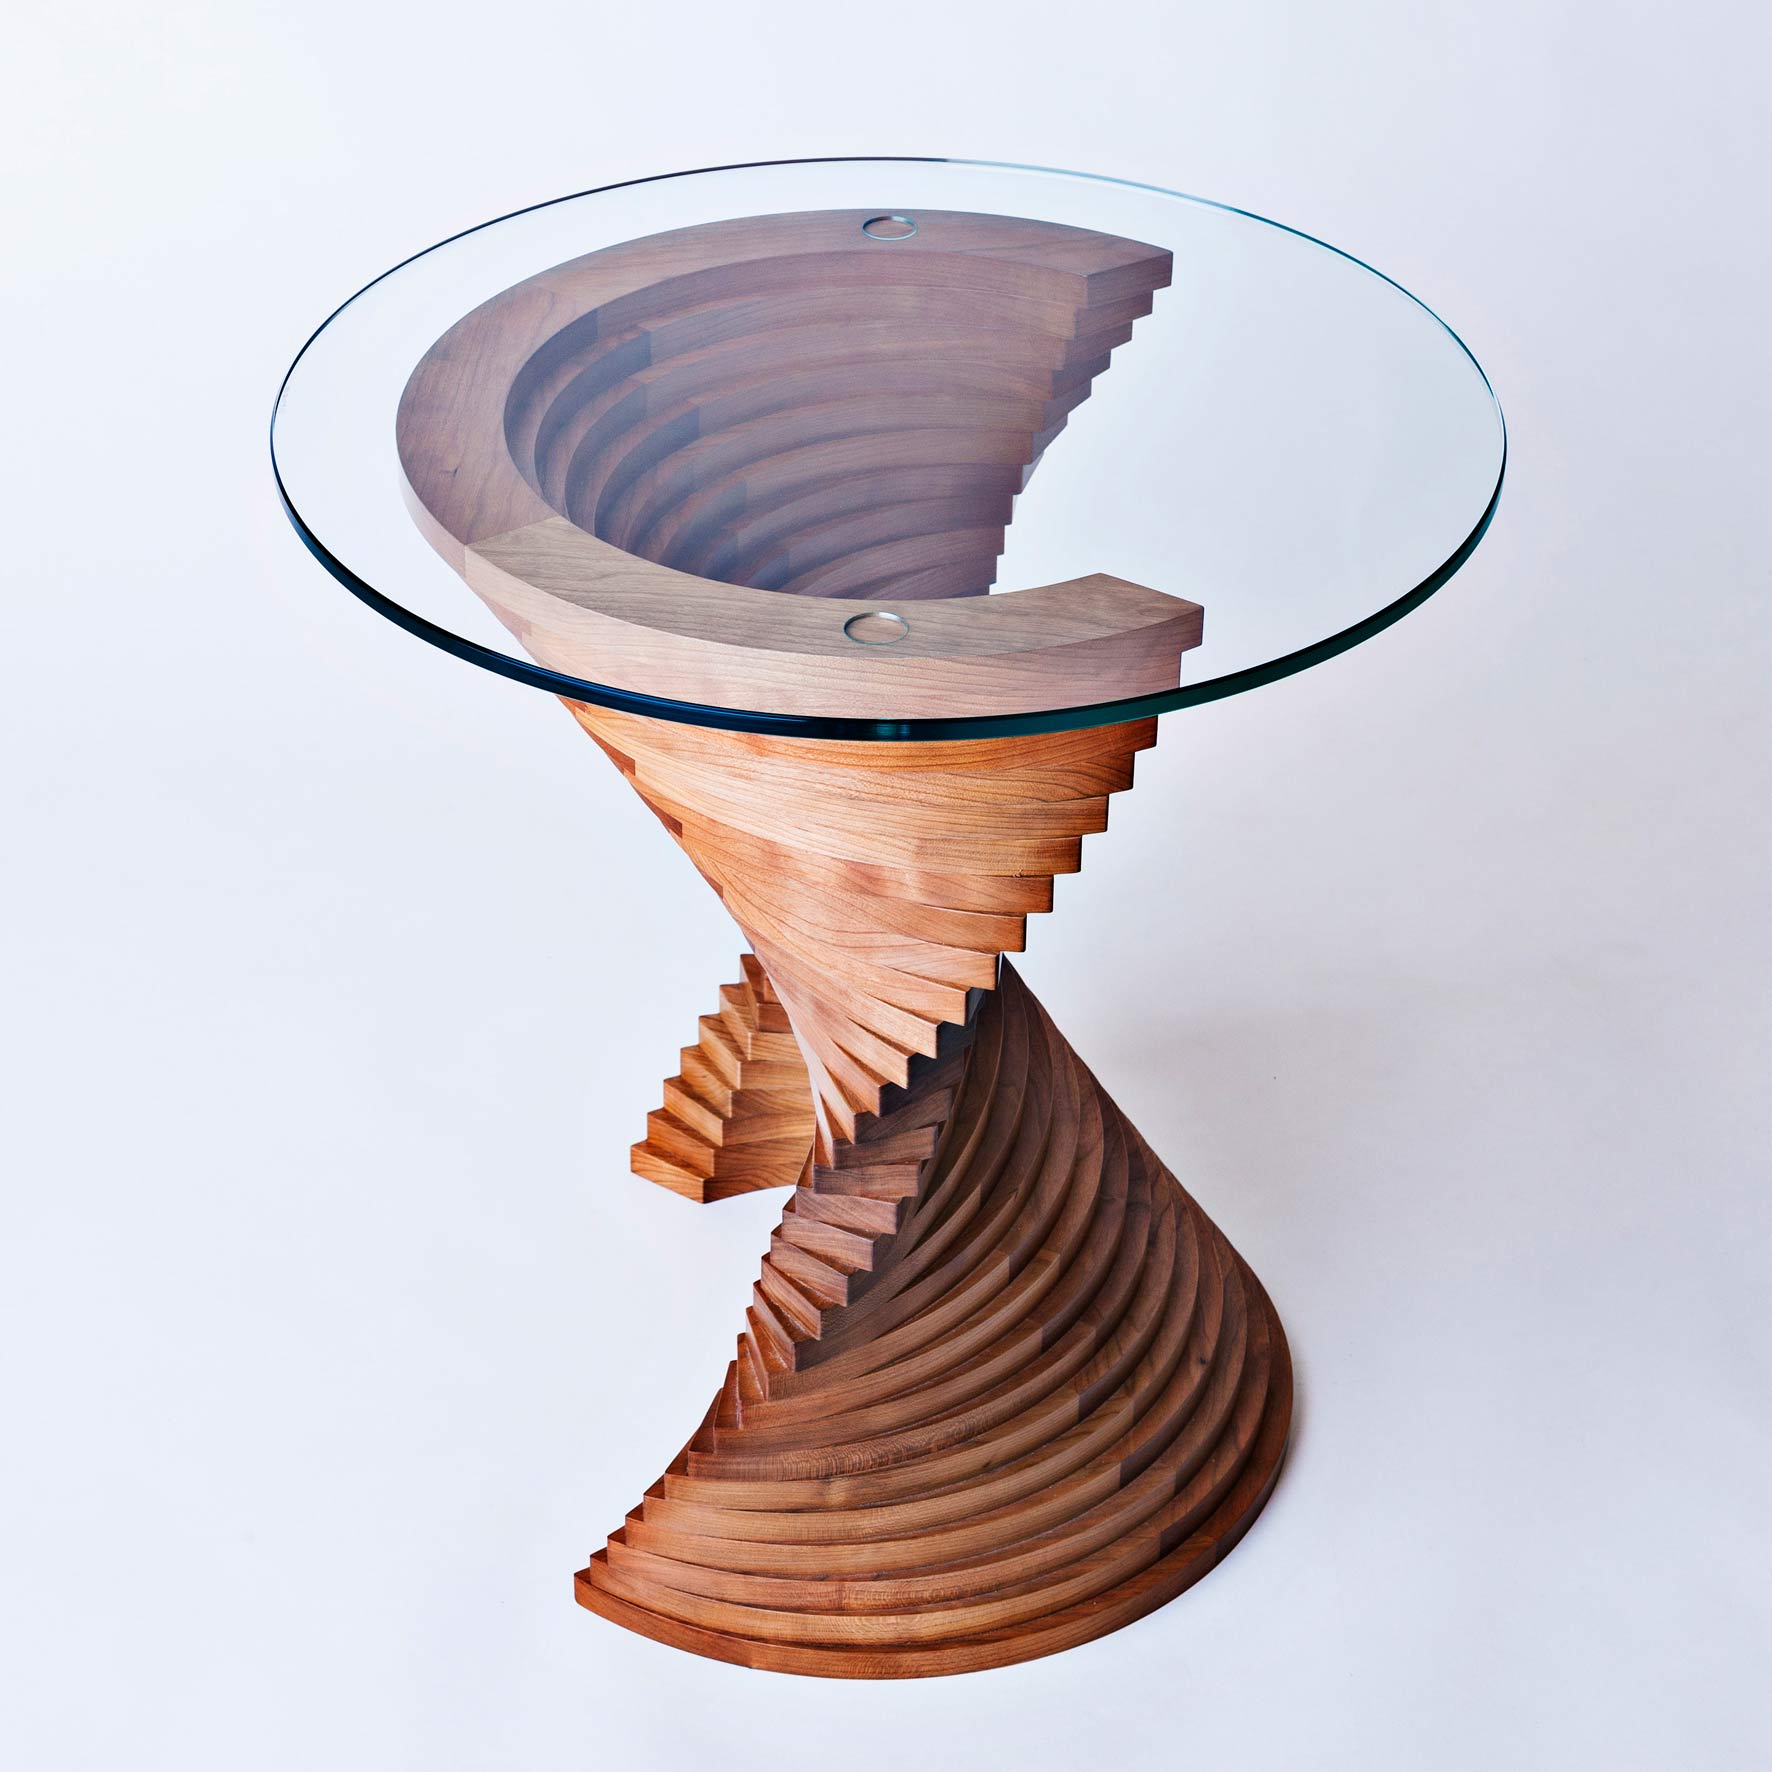 Aguaviva sculptural side table